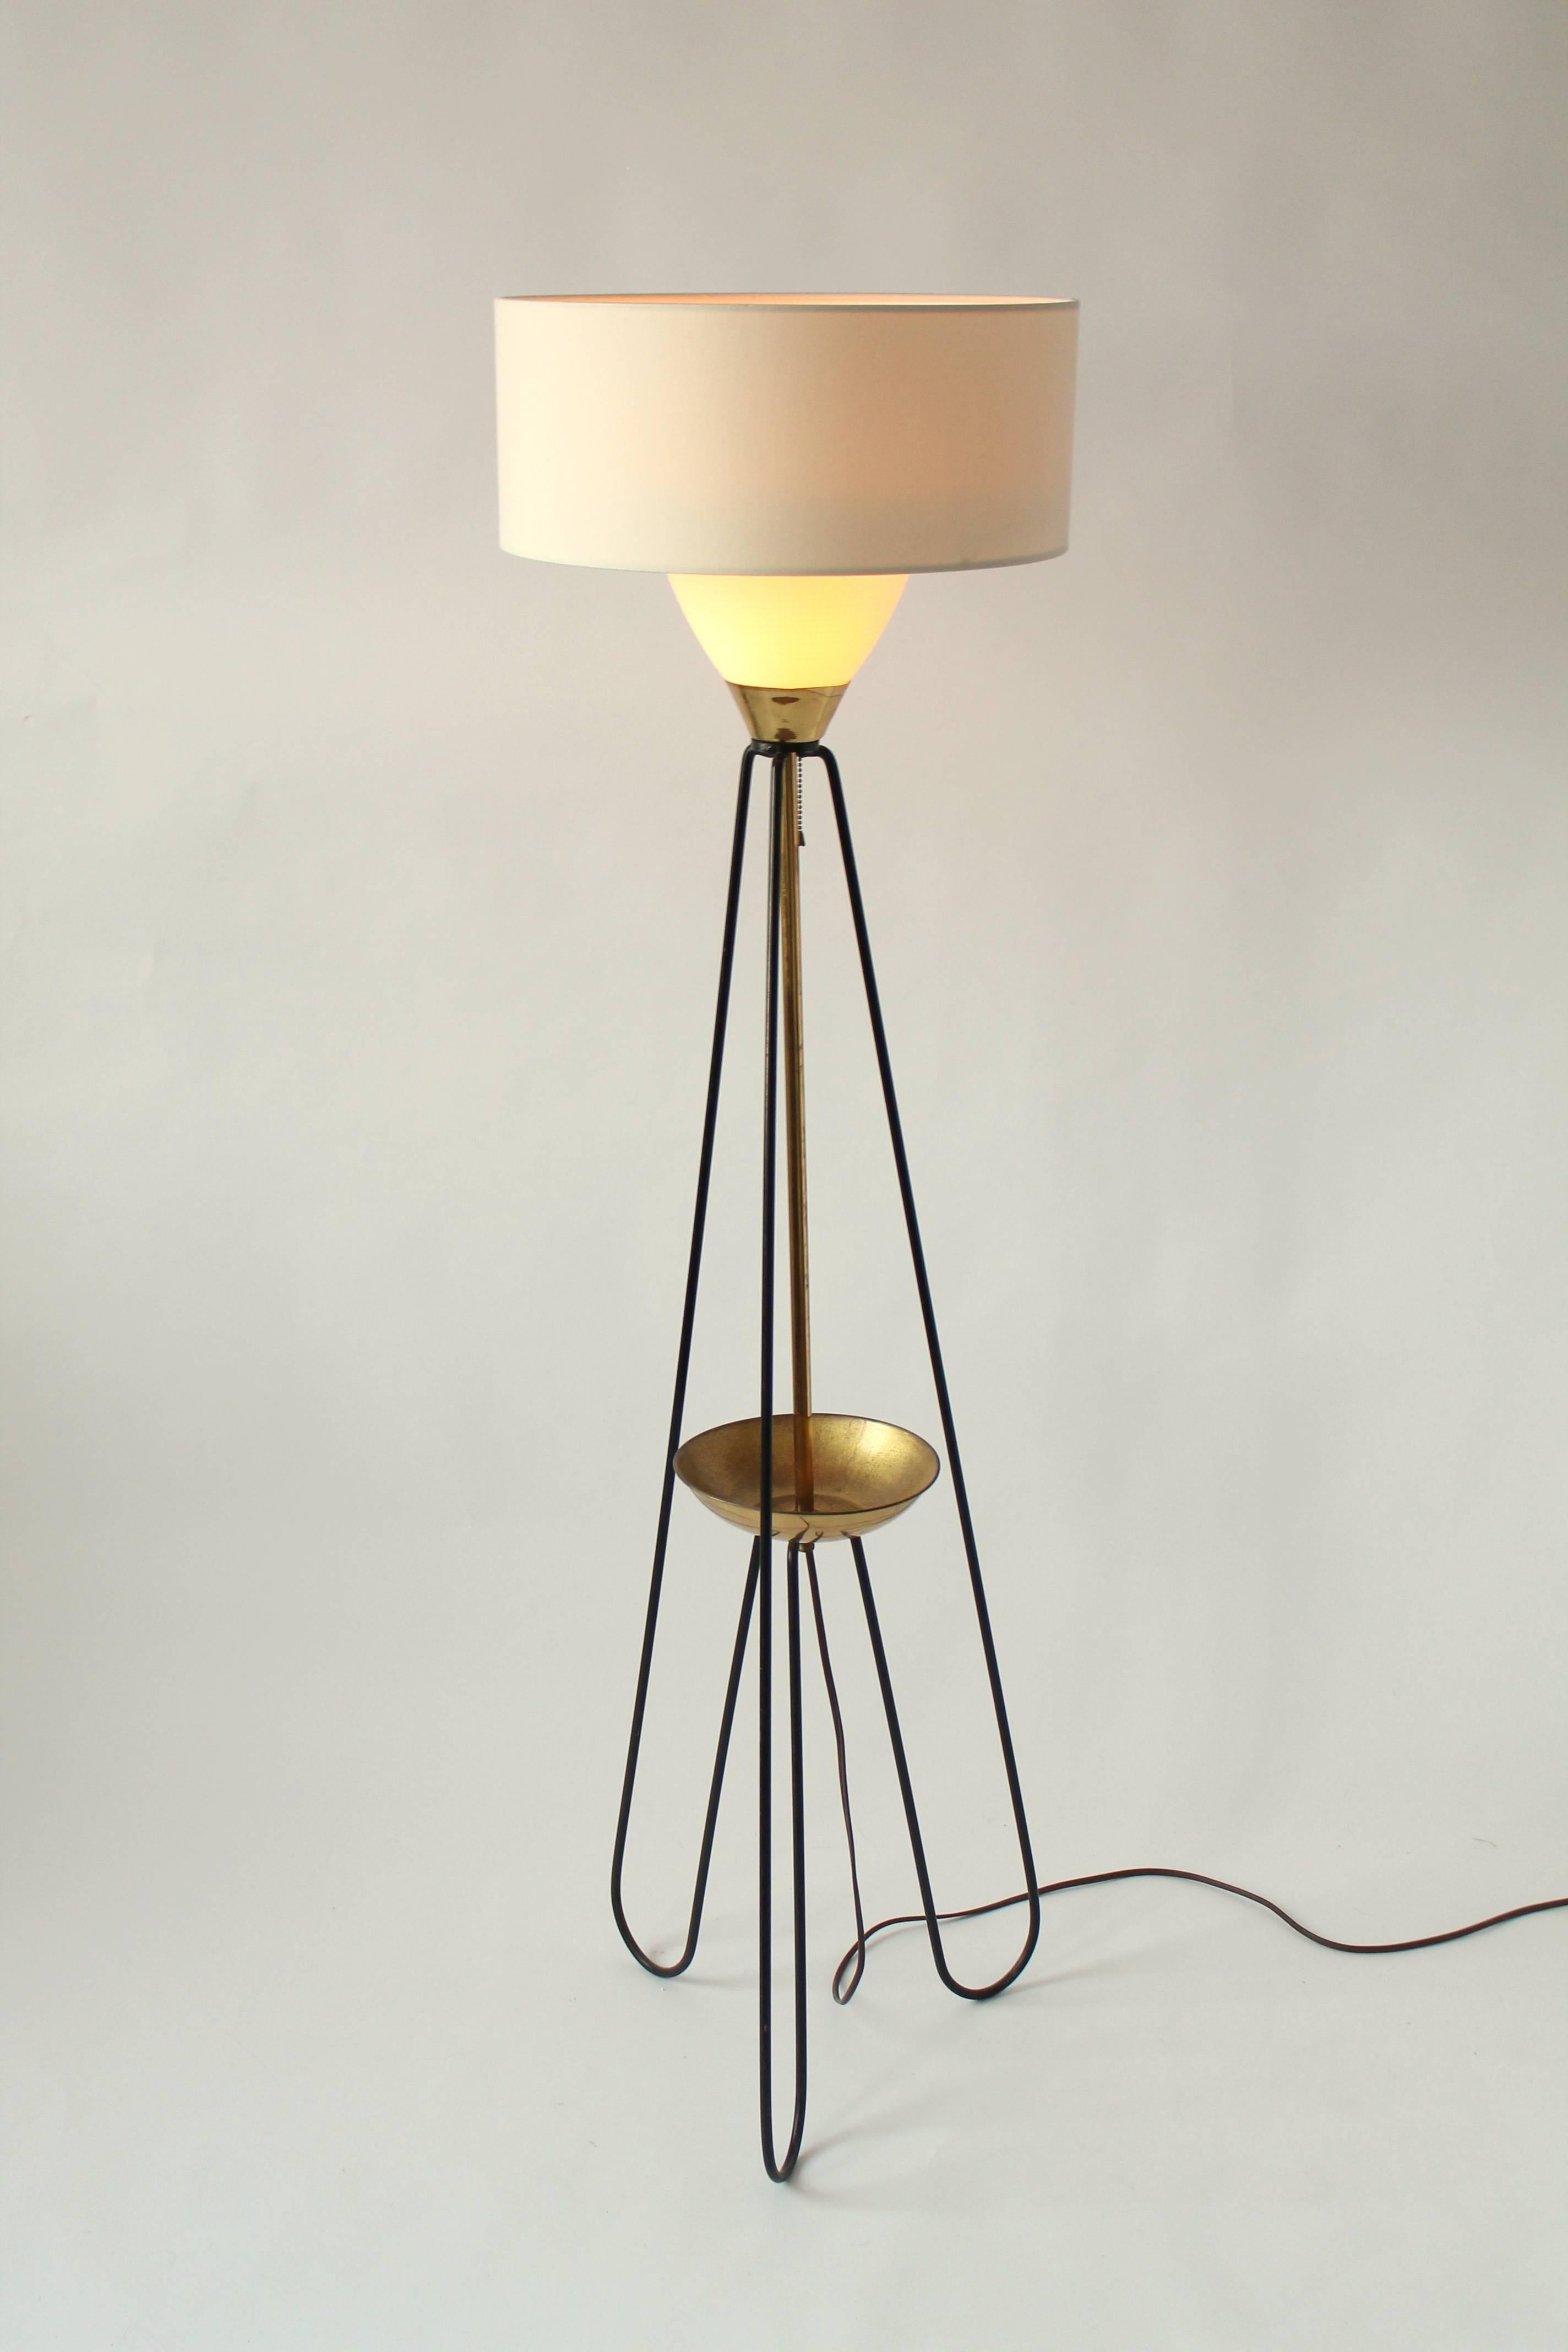 hairpin floor lamp